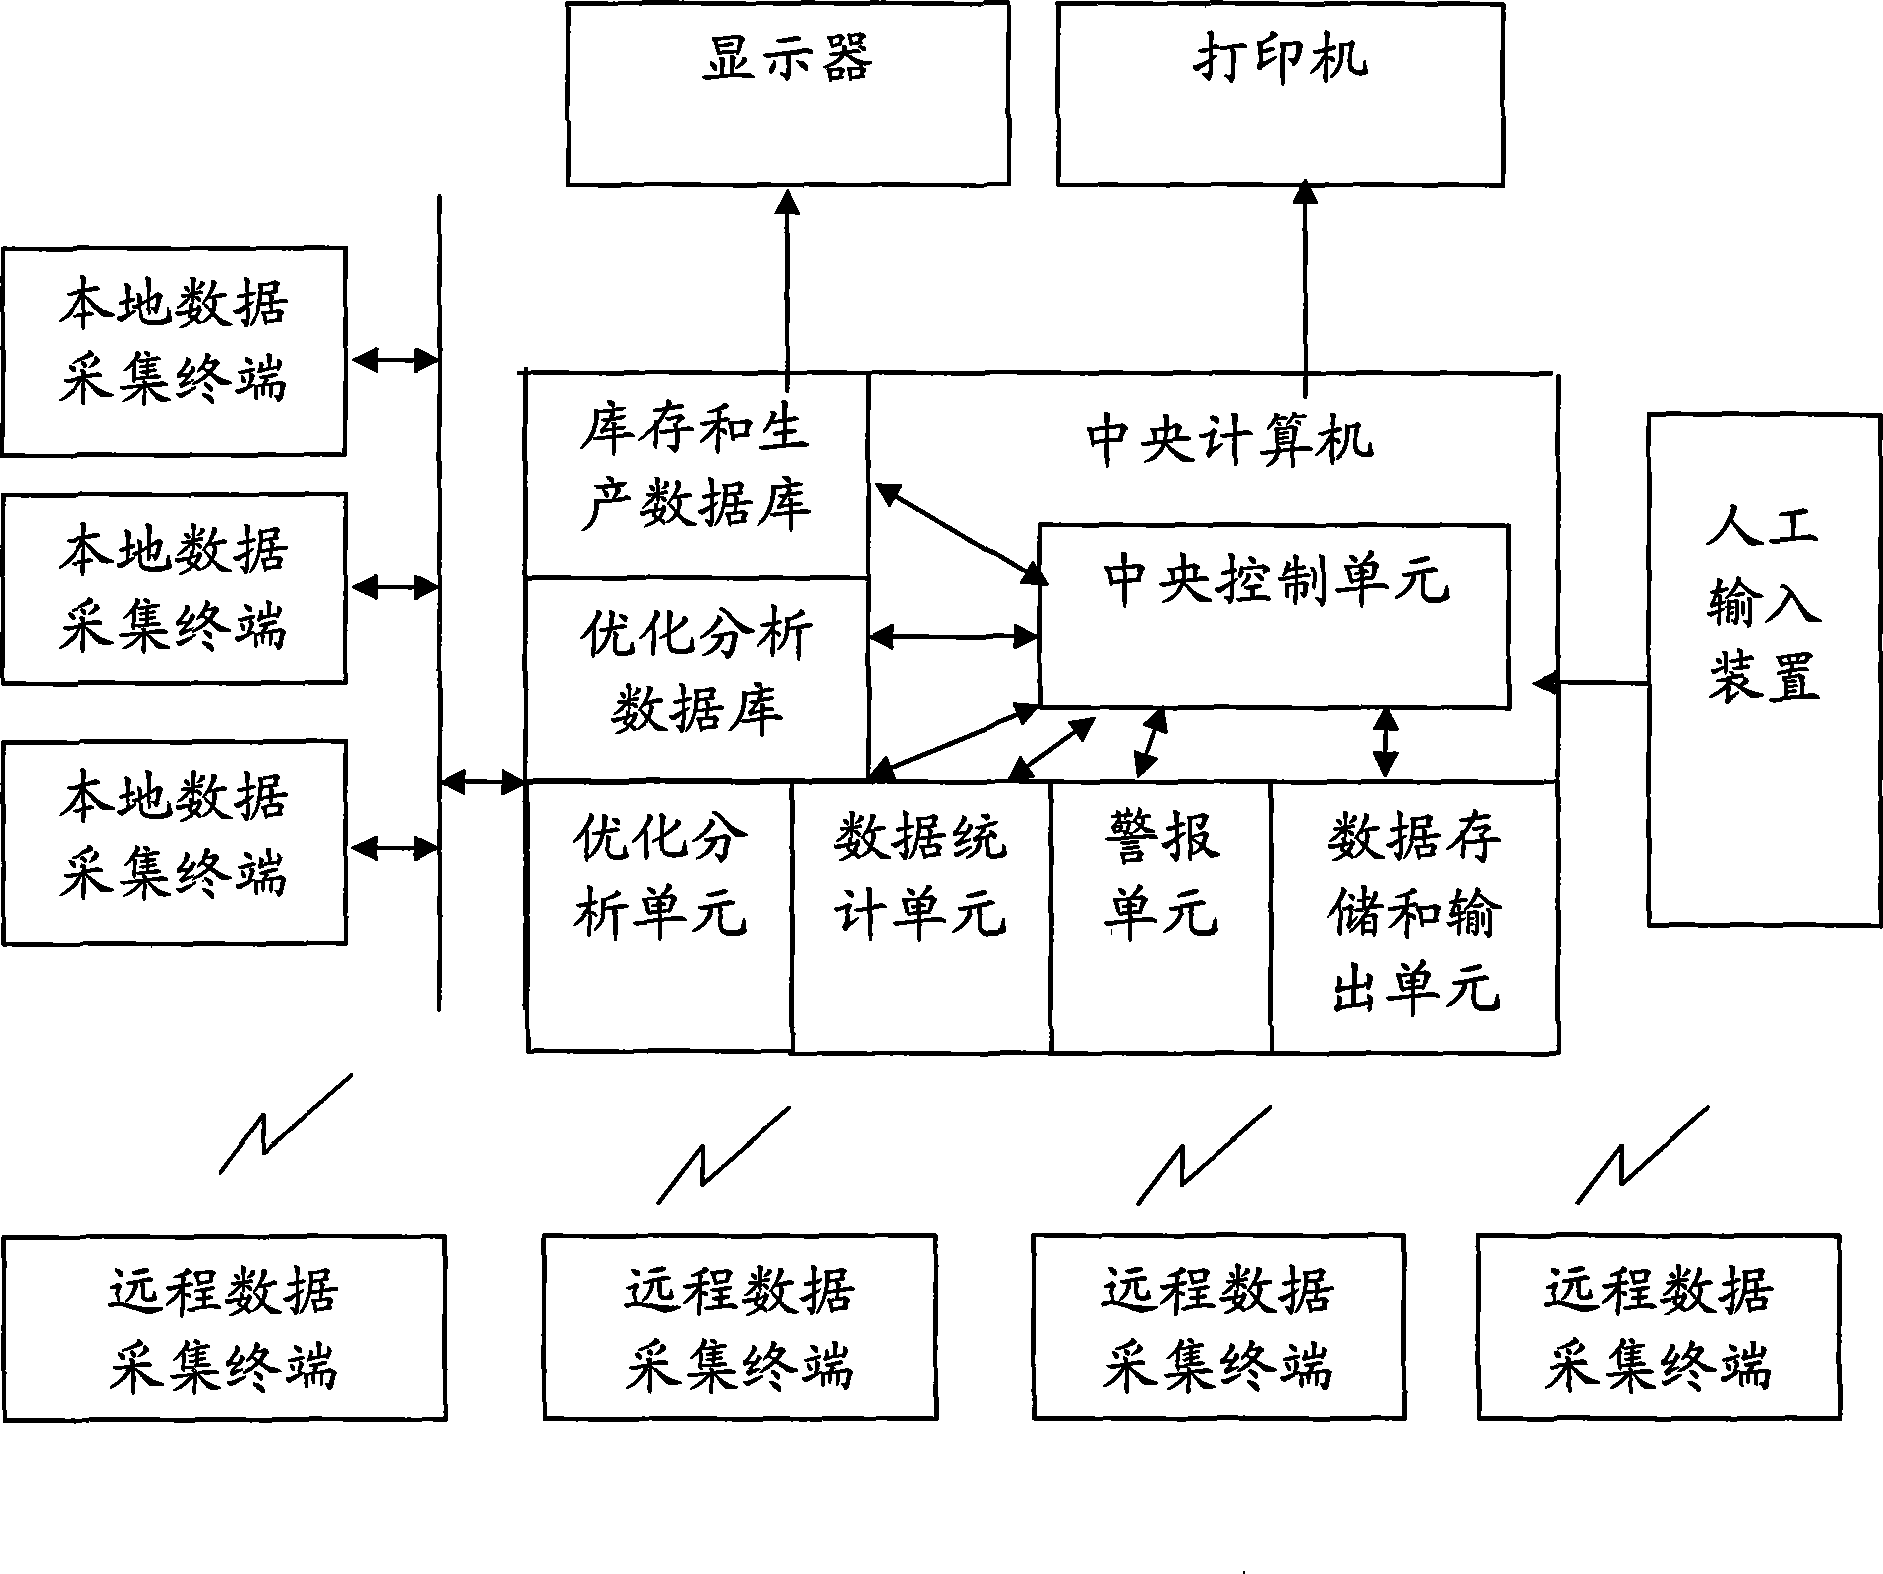 Computer remote production management system